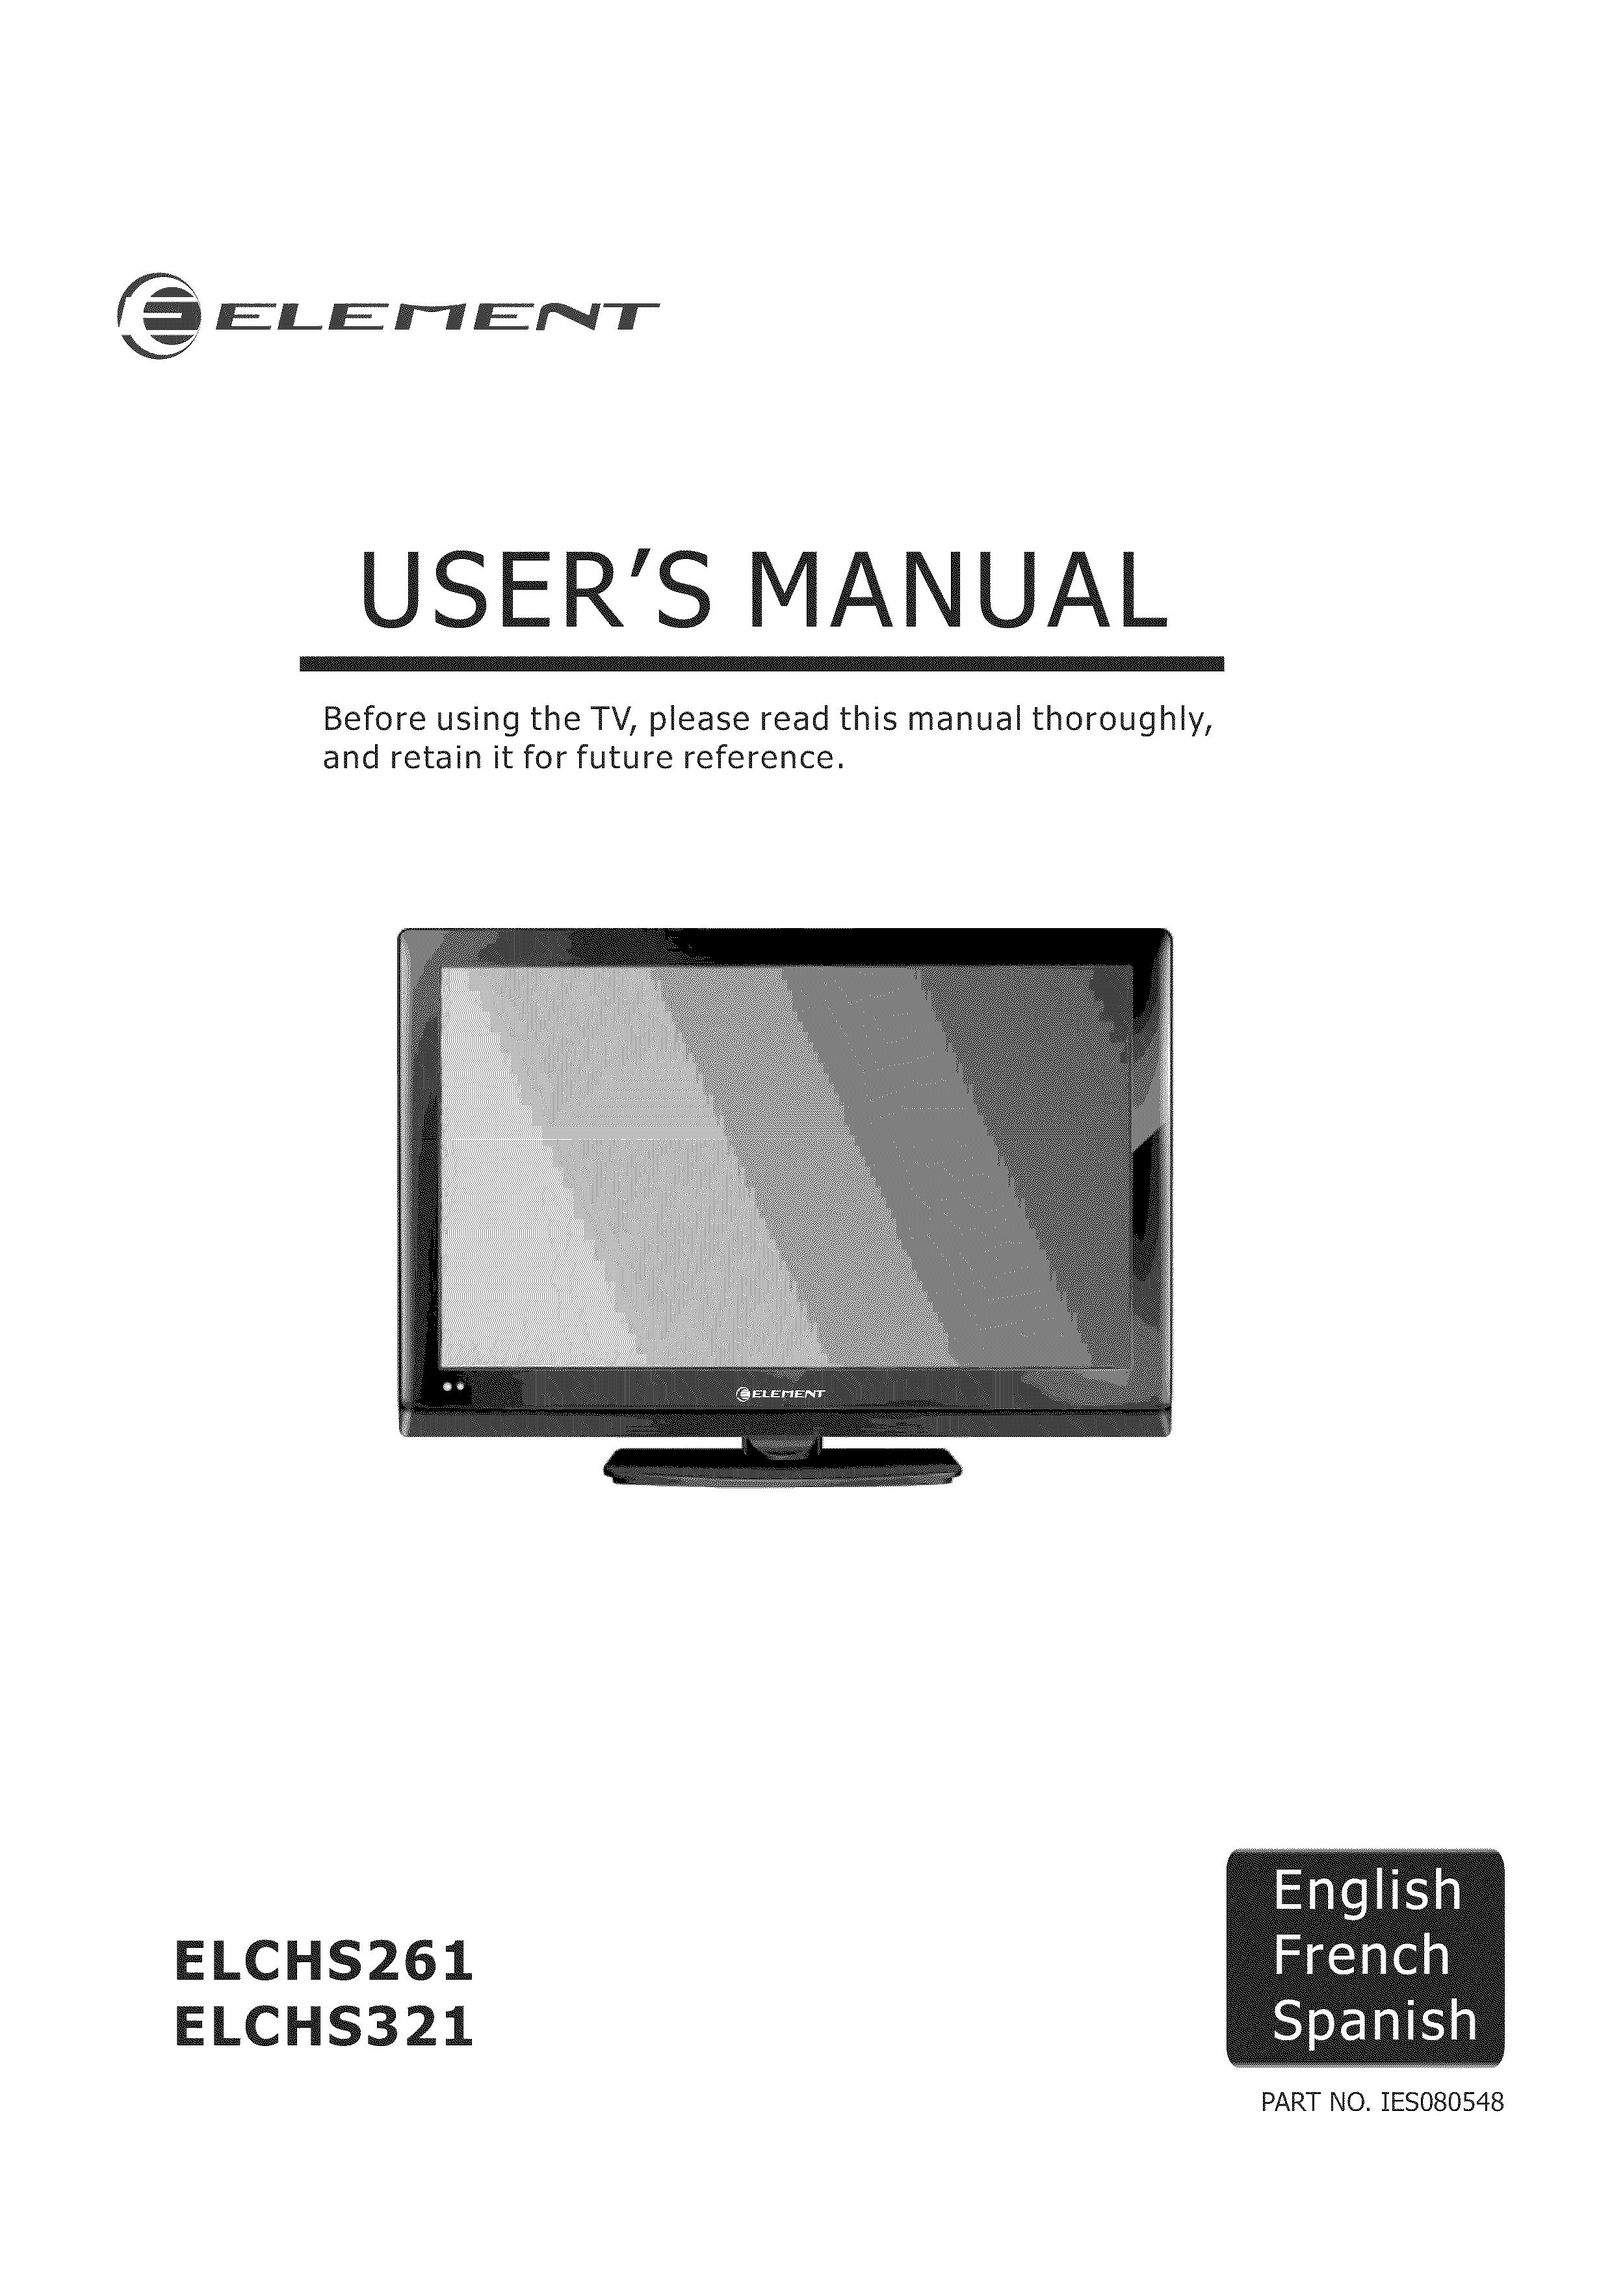 Element Electronics ELCHS321 Flat Panel Television User Manual